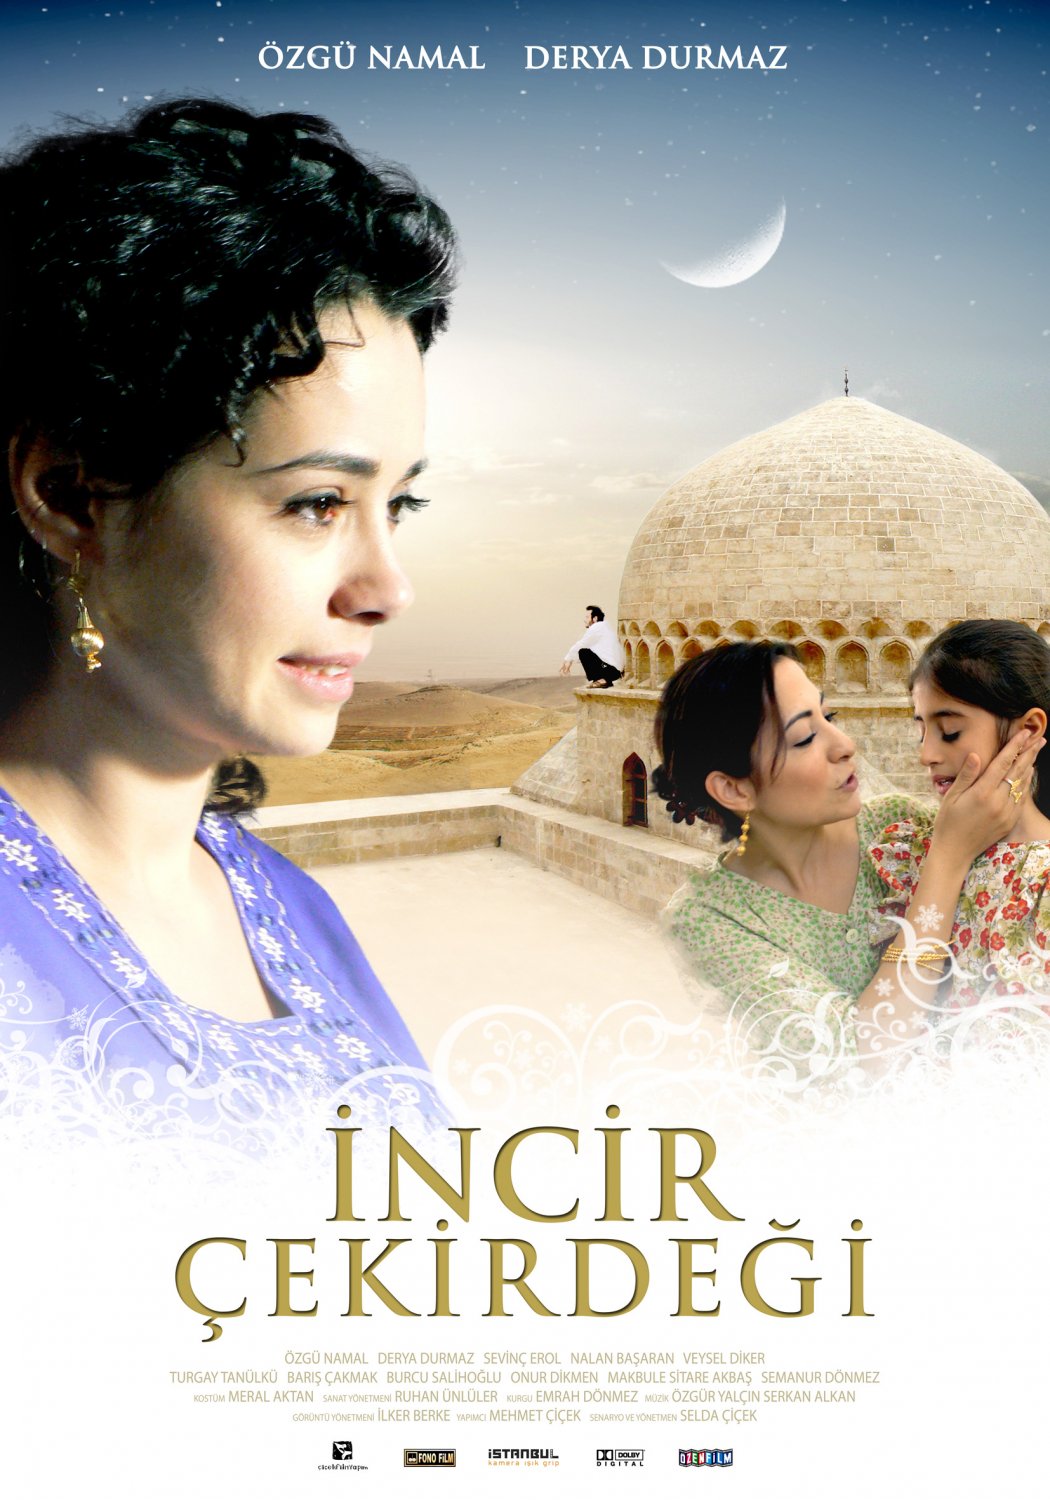 Extra Large Movie Poster Image for Incir çekirdegi 